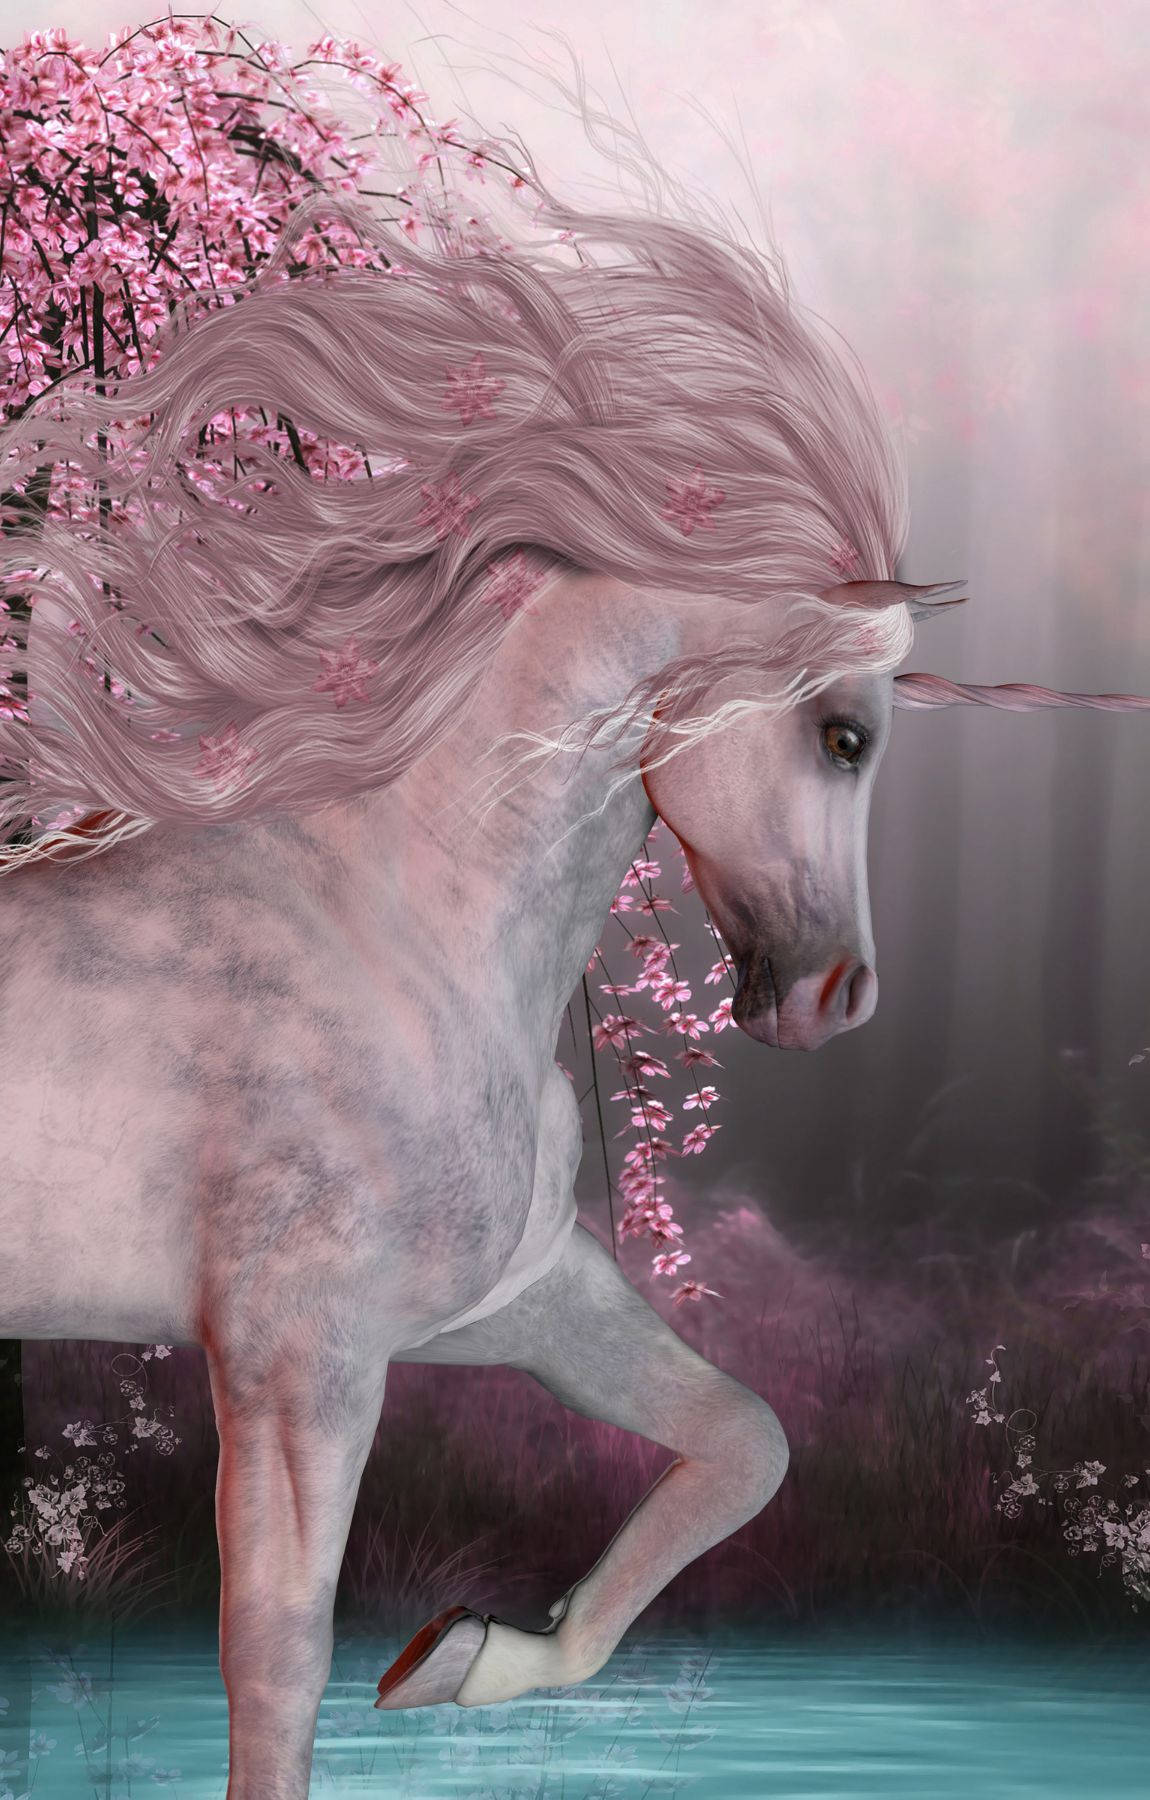 An enchanted unicorn takes flight into the night Wallpaper